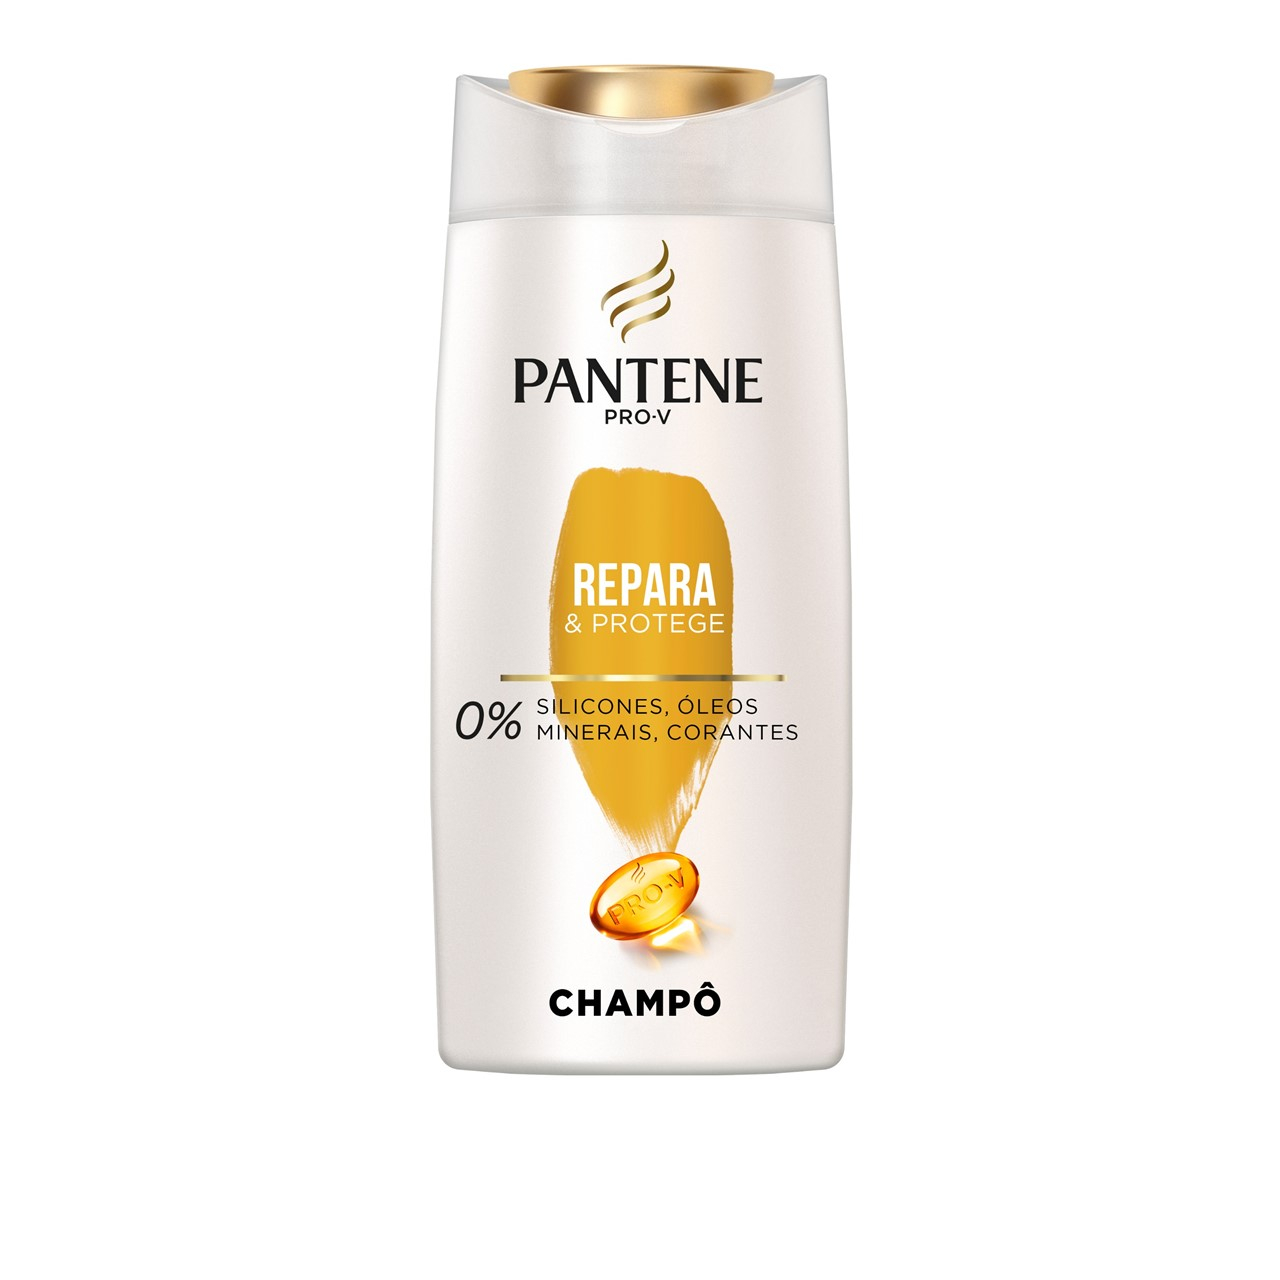 Pantene Pro-V Repair & Protect Shampoo 675ml